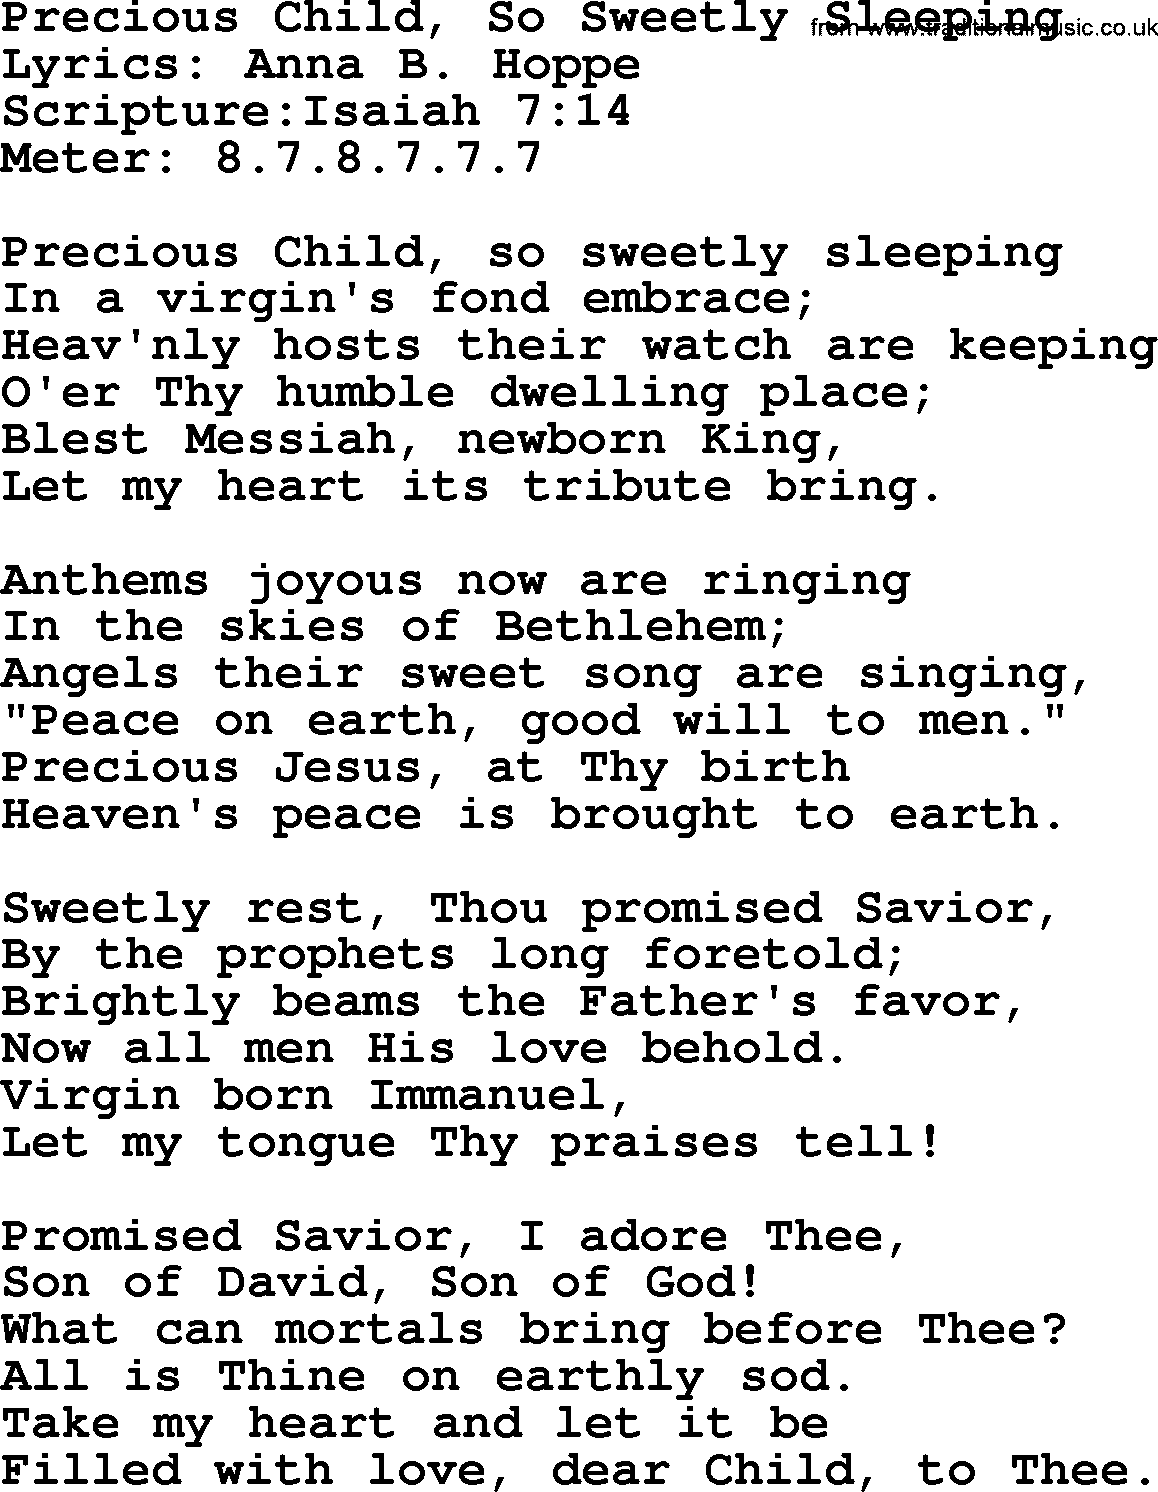 Hymns about  Angels, Hymn: Precious Child, So Sweetly Sleeping, lyrics, sheet music, midi & Mp3 music with PDF